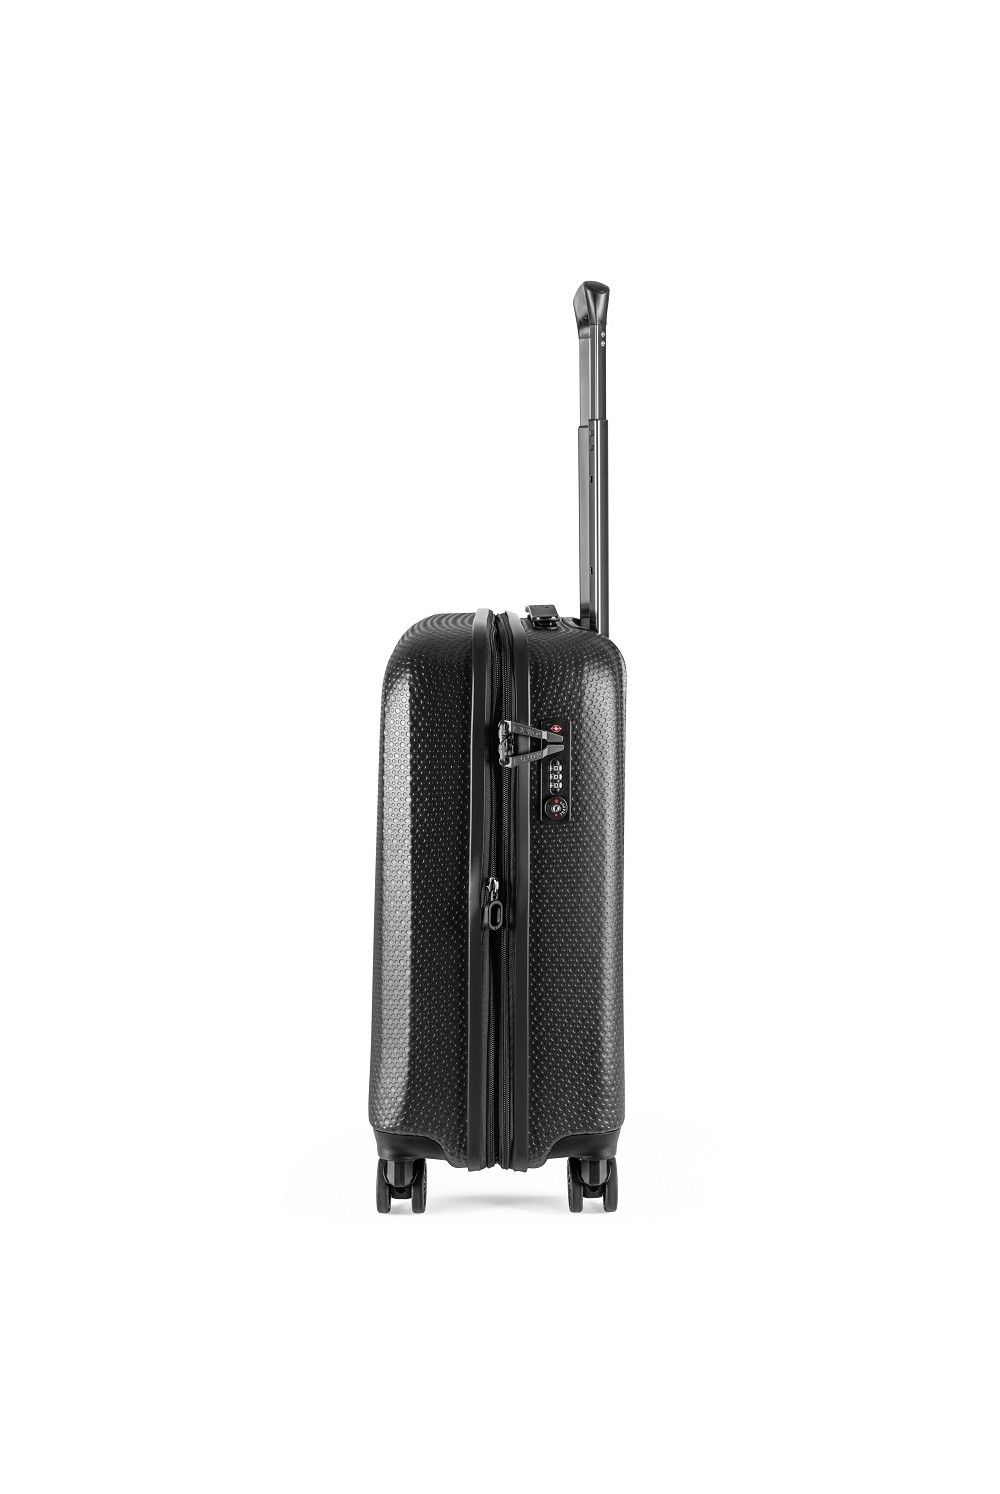 Hand luggage Epic GTO 5 55cm 4 wheel expandable